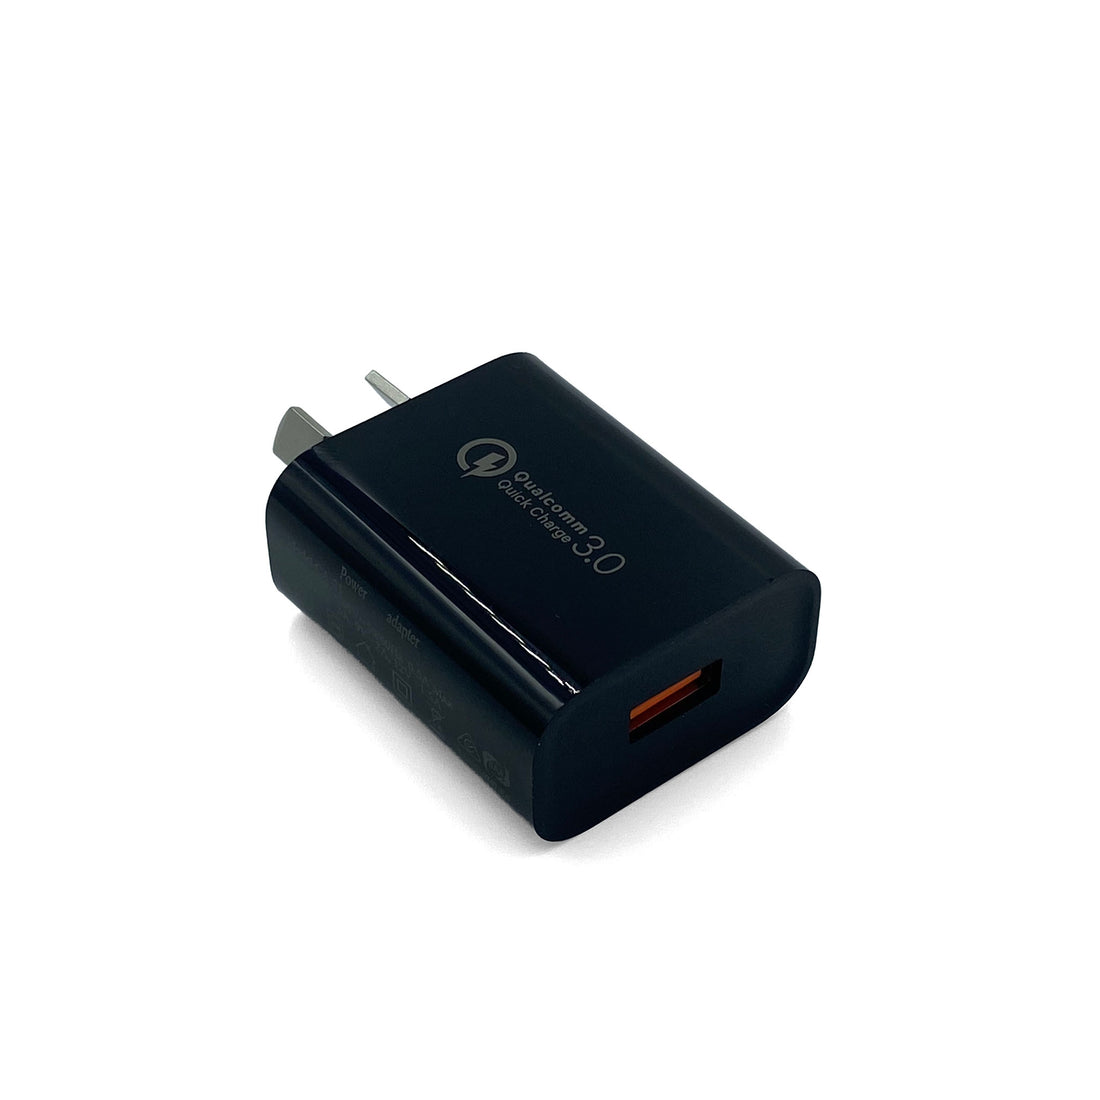 USB C charger with AU plug